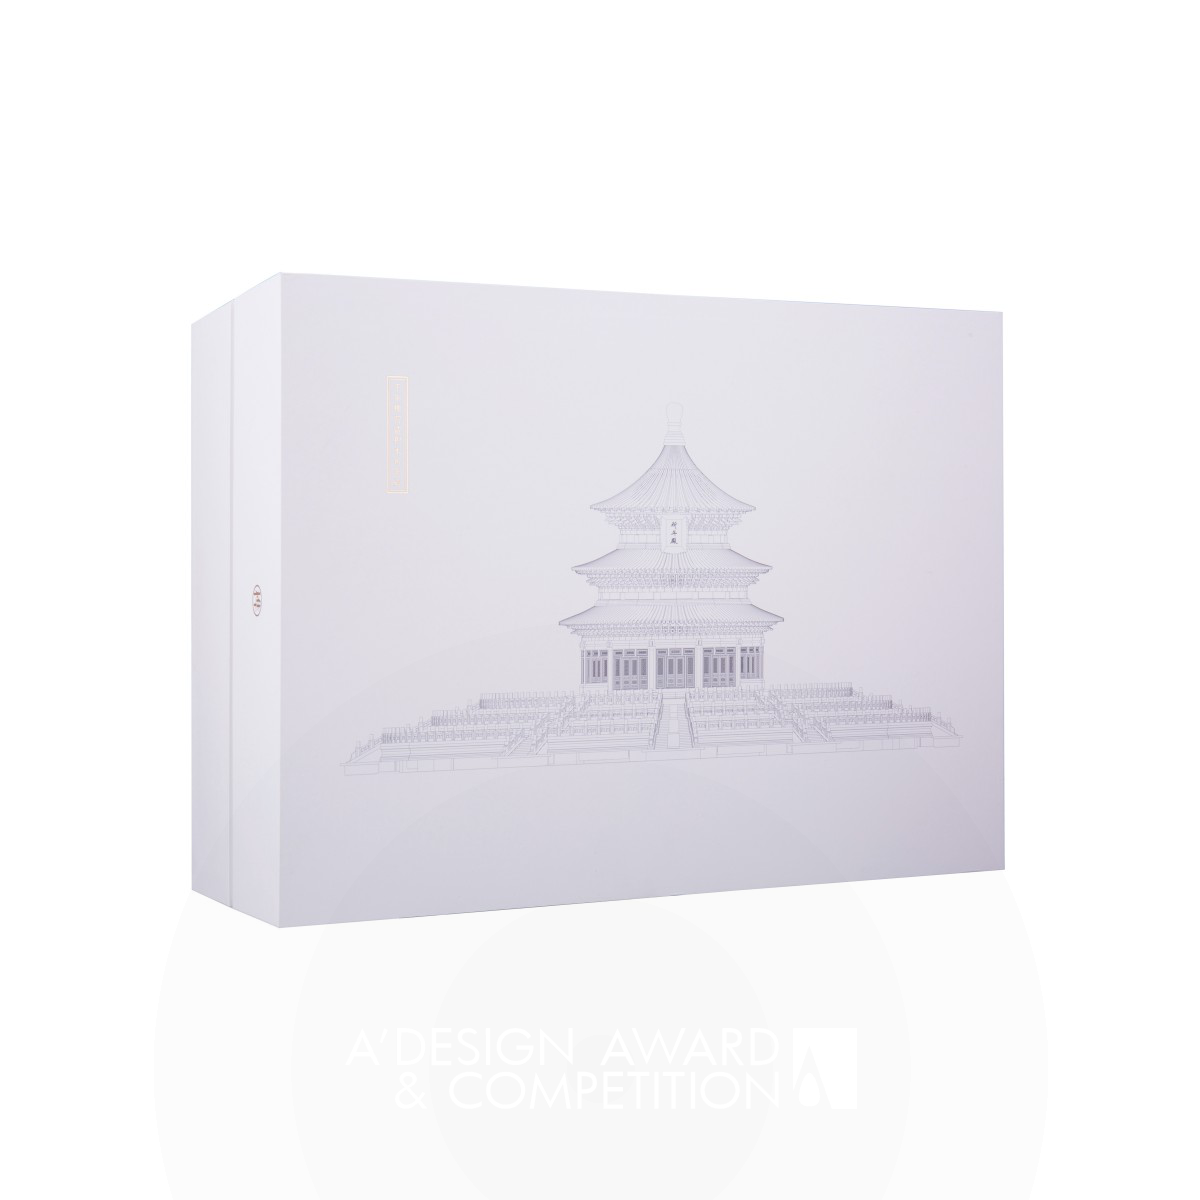 Beijing AIQI Technology Co., Ltd. Unveils Mi Temple of Heaven Builder Packaging